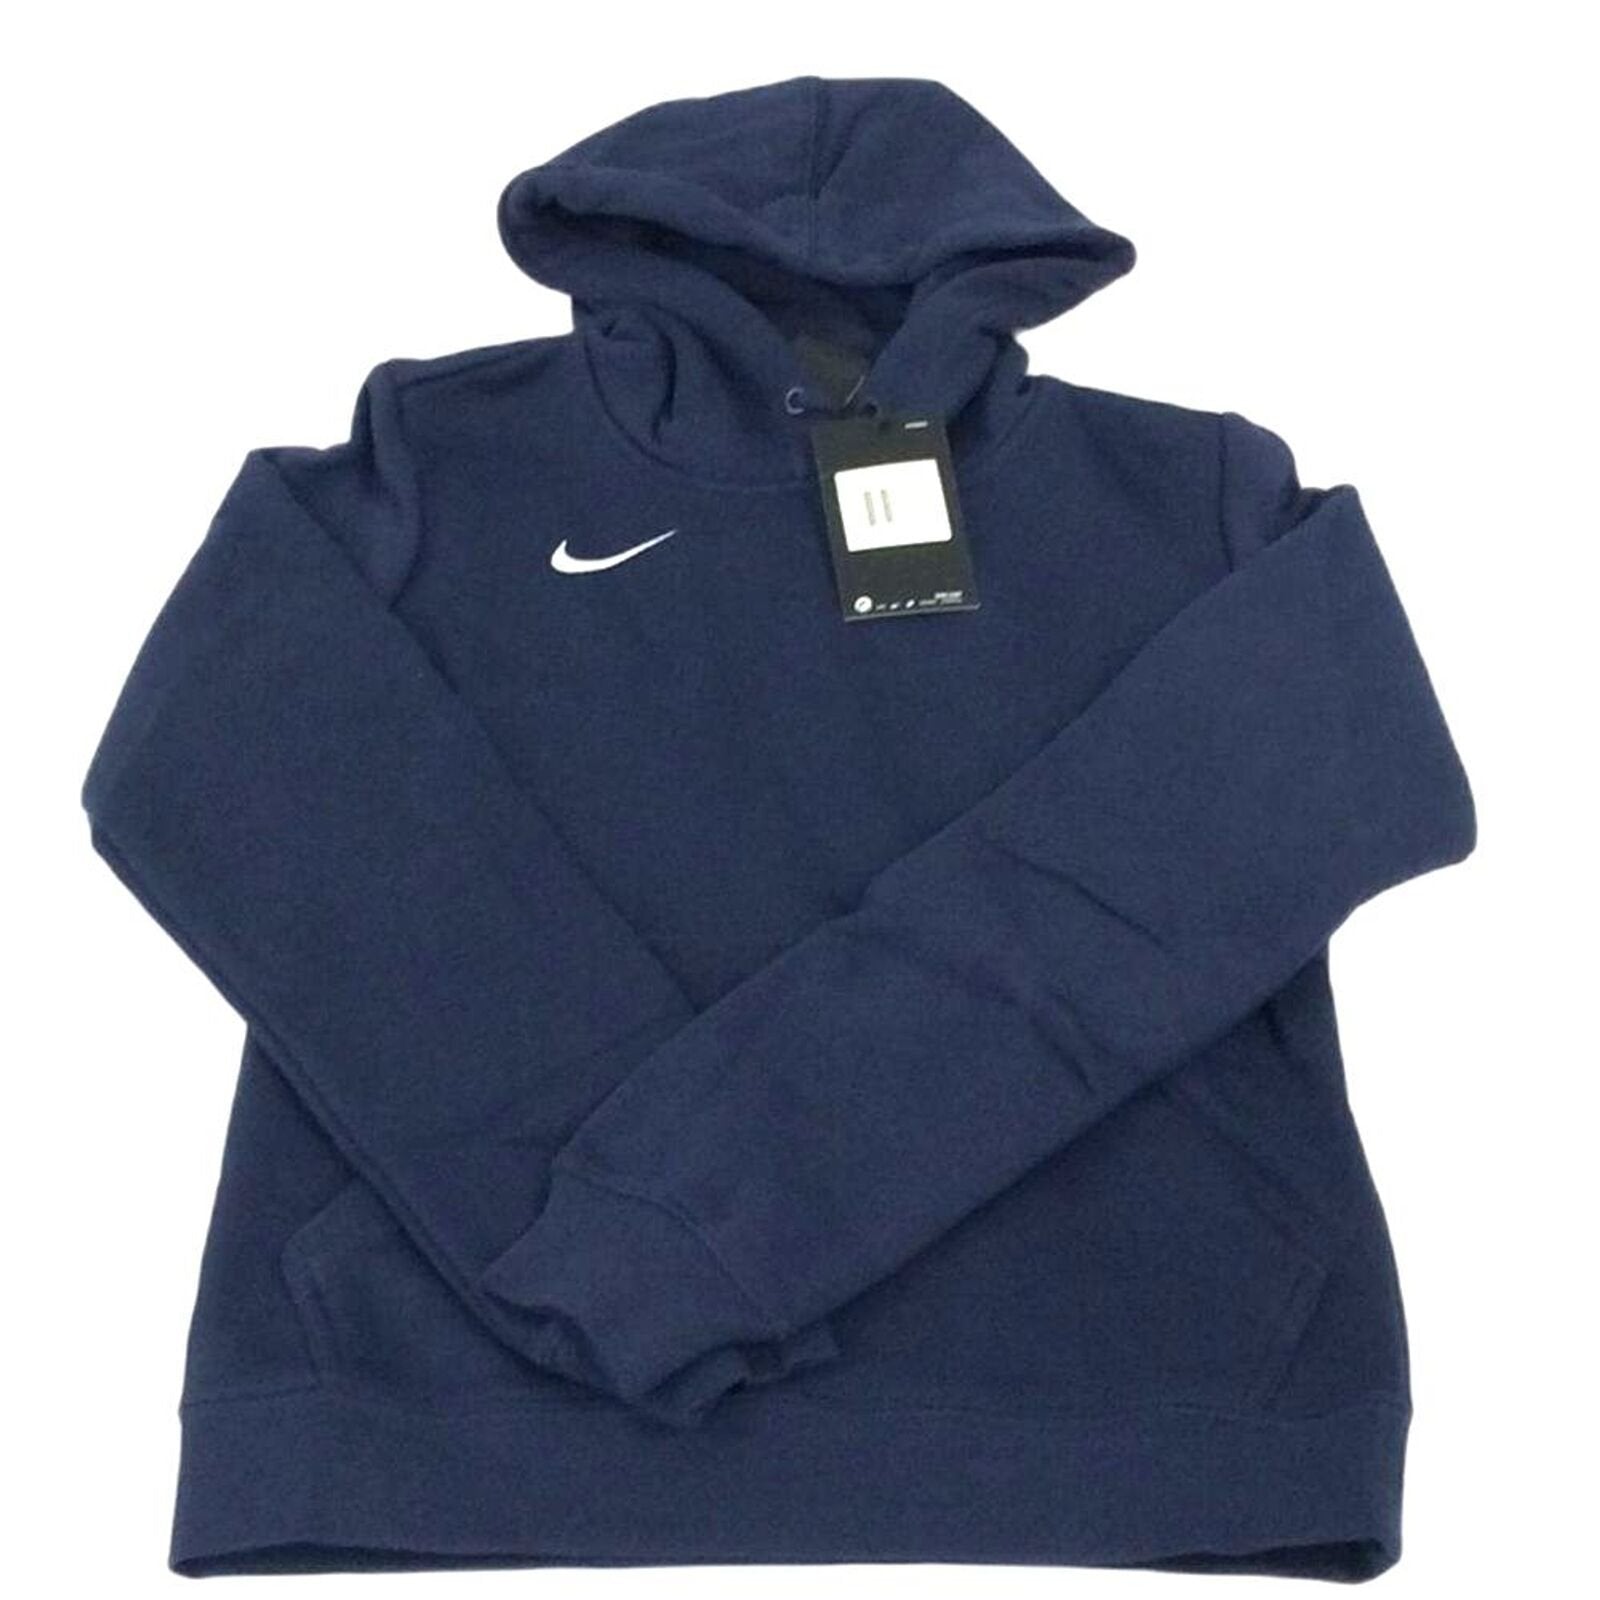 Nike Pullover Fleece Hoodie Navy Womens Size XS